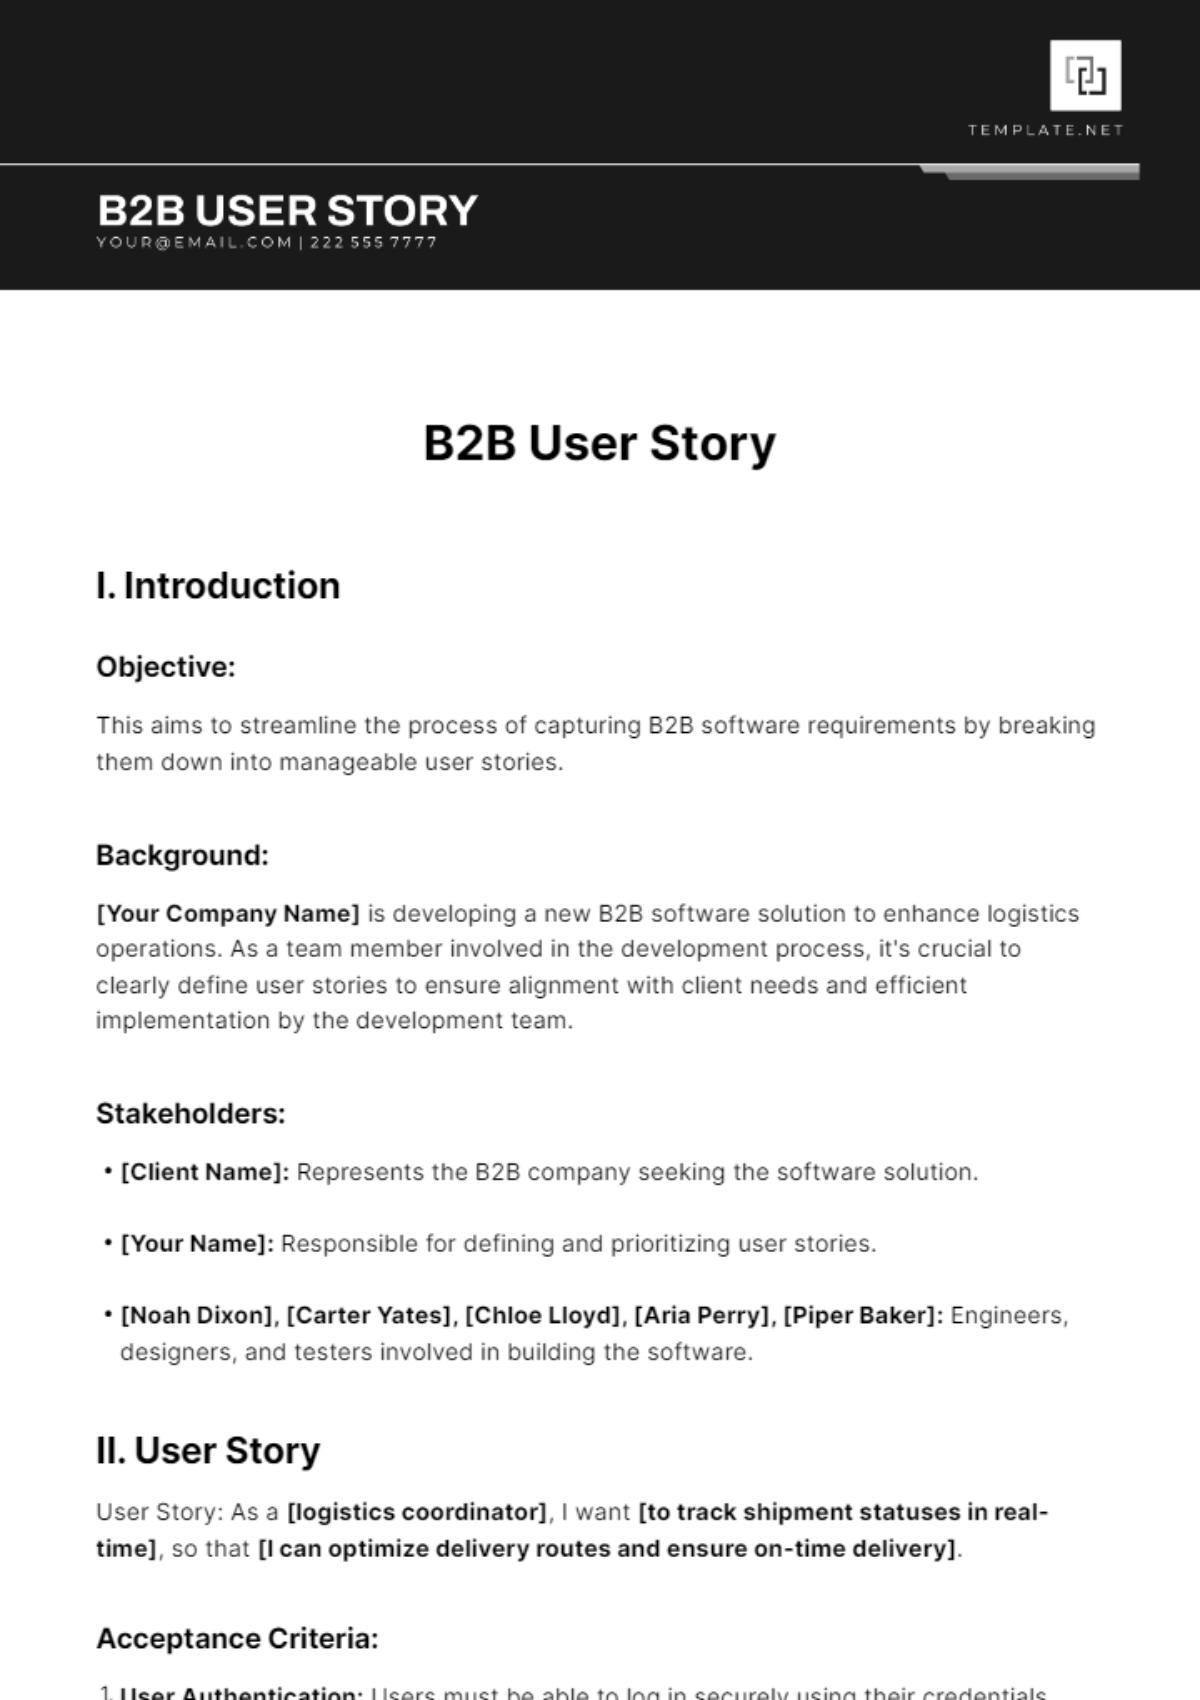 B2B User Story Template